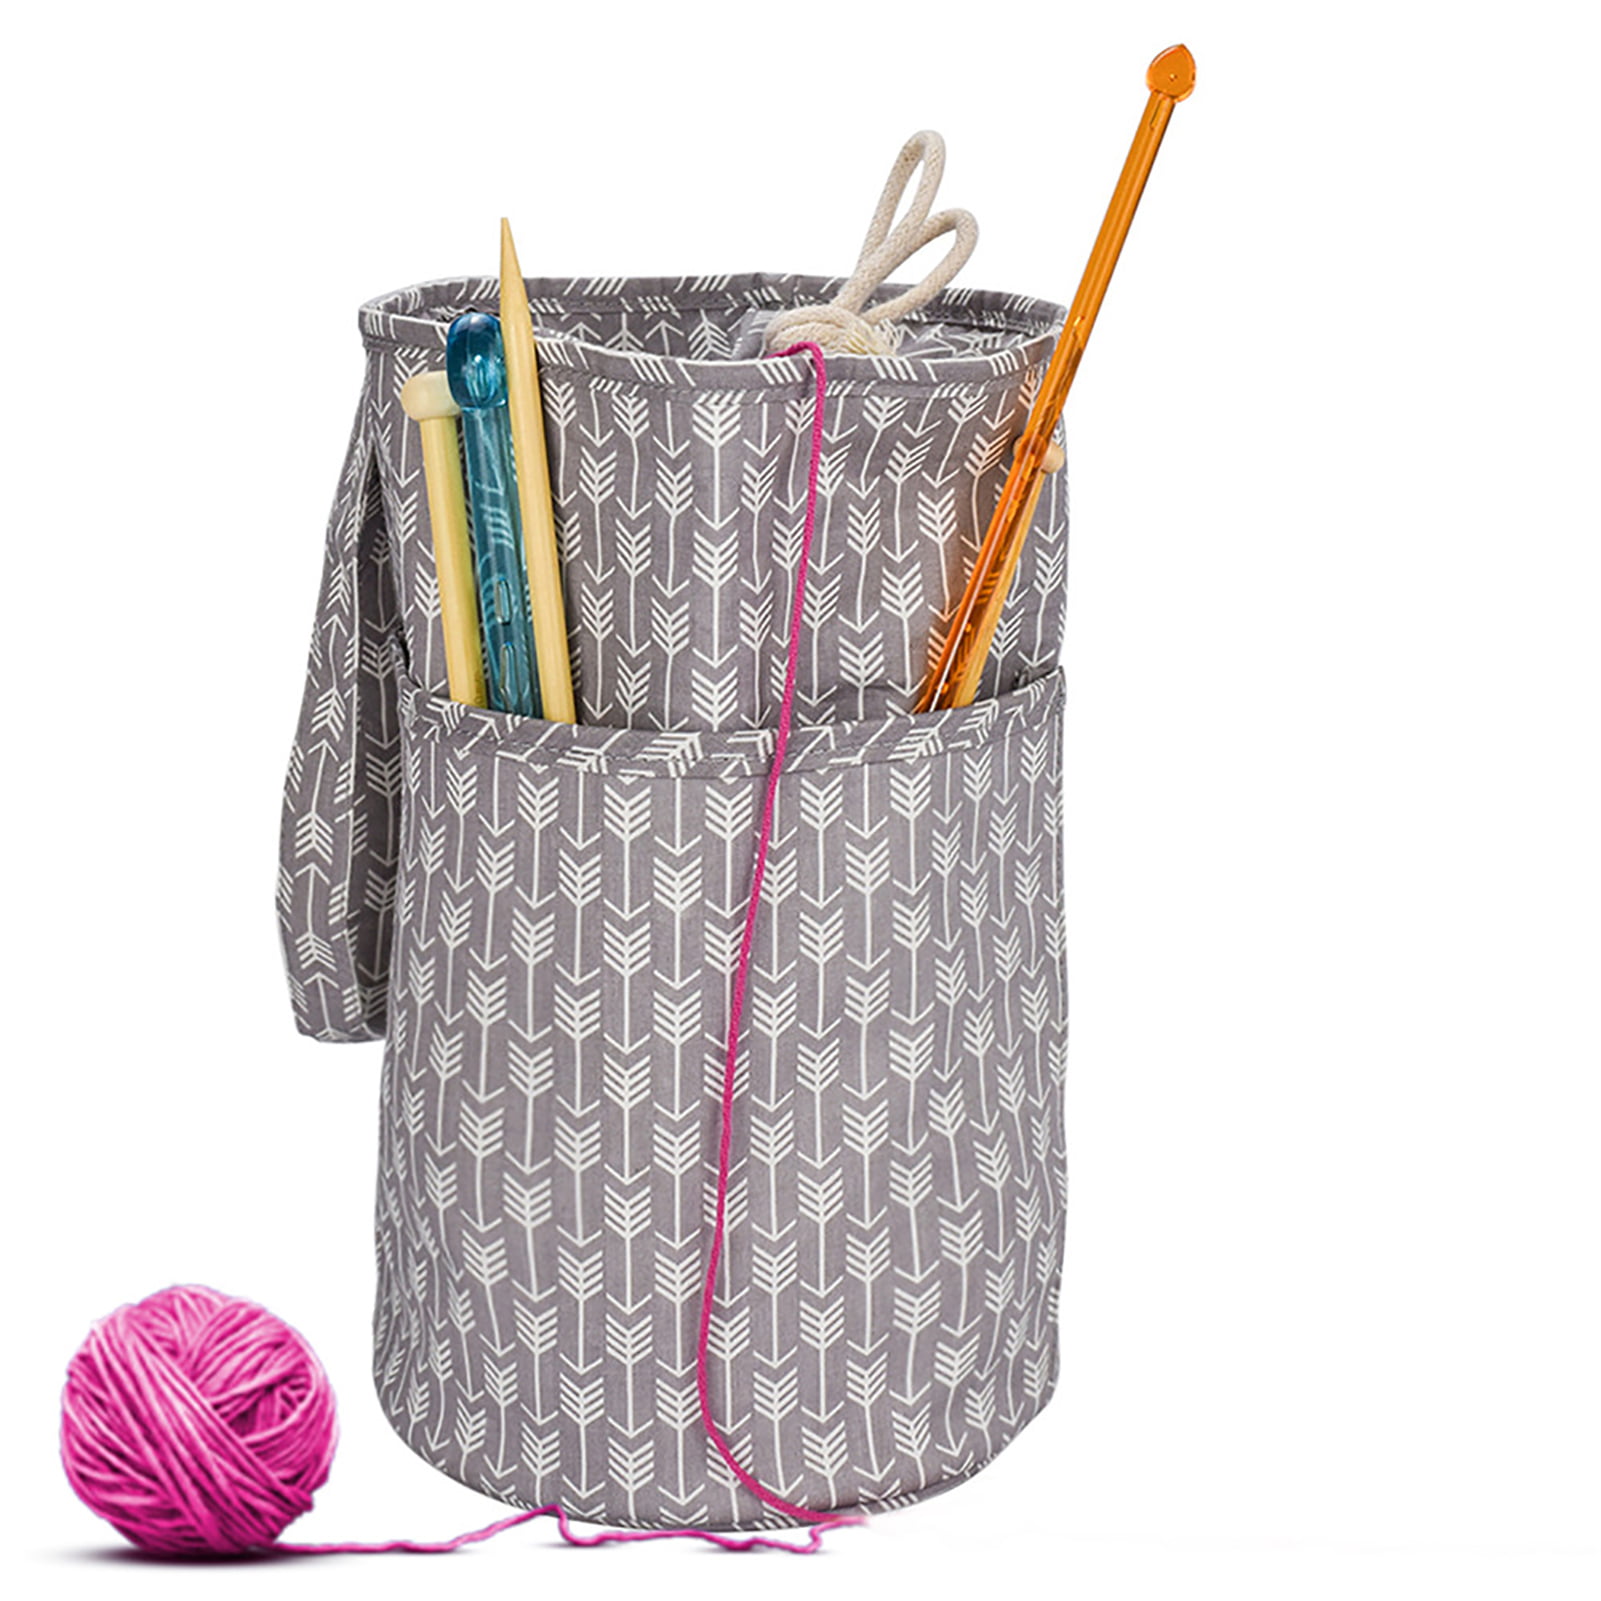 Yarn Portable Durable Storage Tote Organizer Knitting Needles Supplies Gifts Knitting Bag 